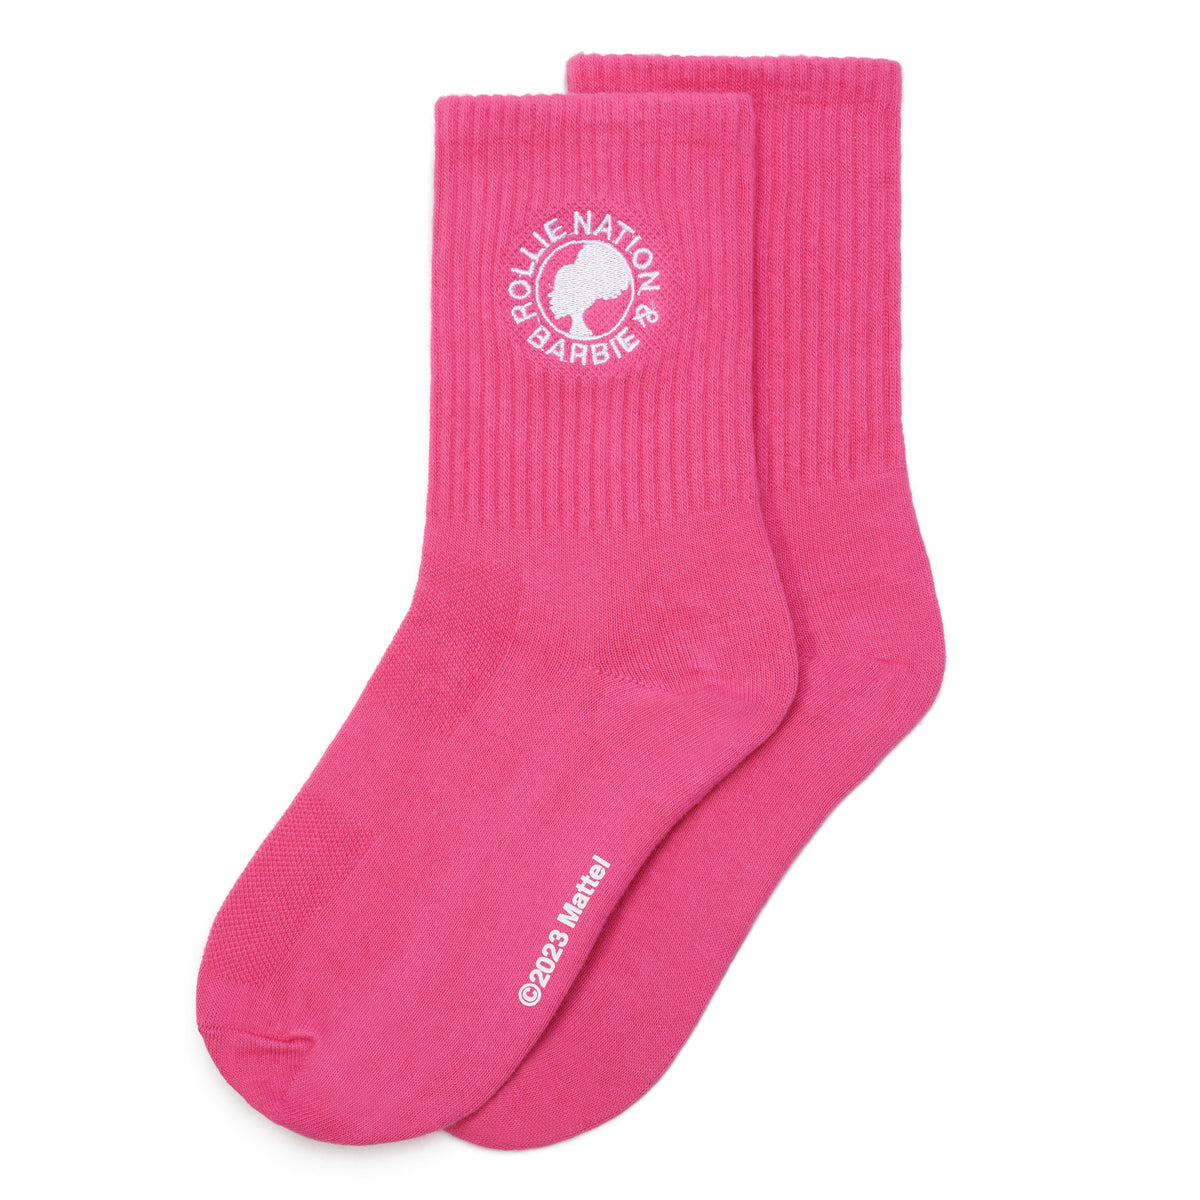 Rollie x Barbie Pink Socks